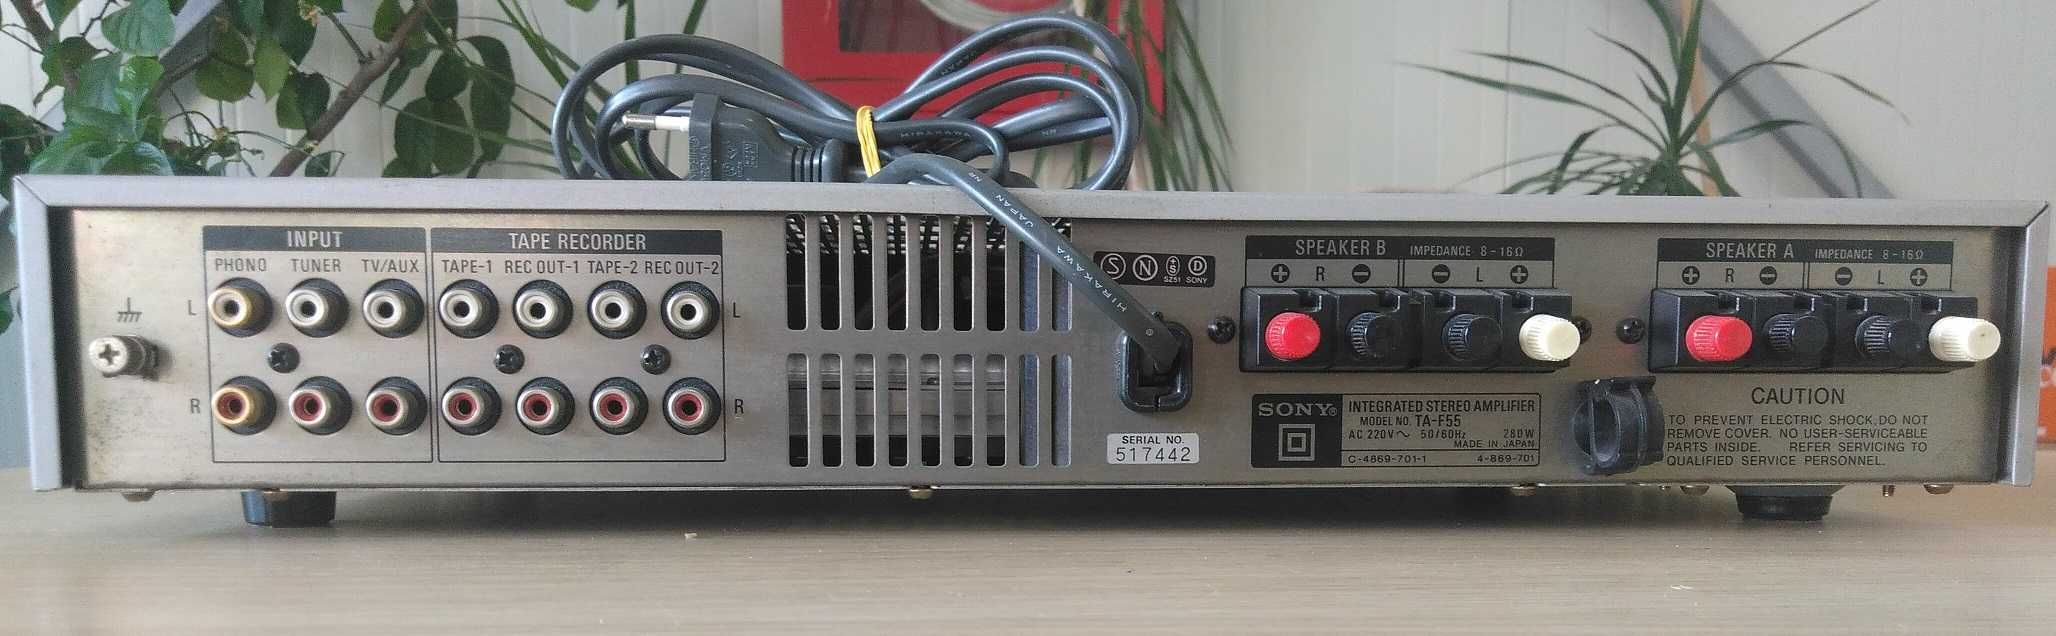 Amplificator Sony TA-F55